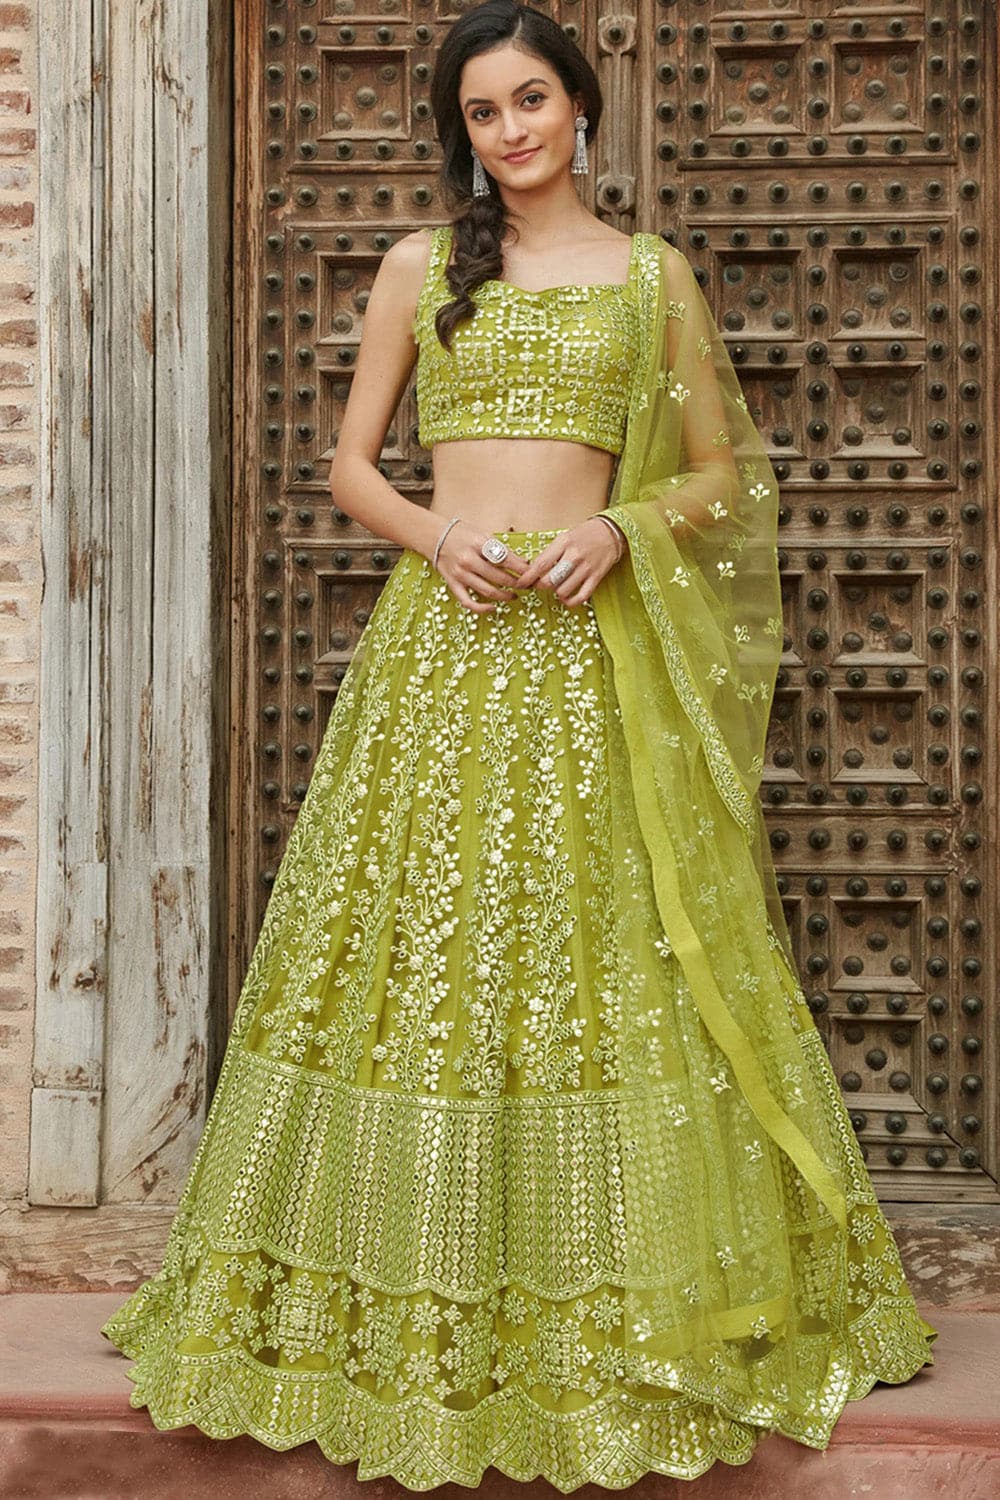 LightMint Green Lehenga Choli Lengha Chunri Dress Indian Ghagra Skirt Sari  Saree | eBay